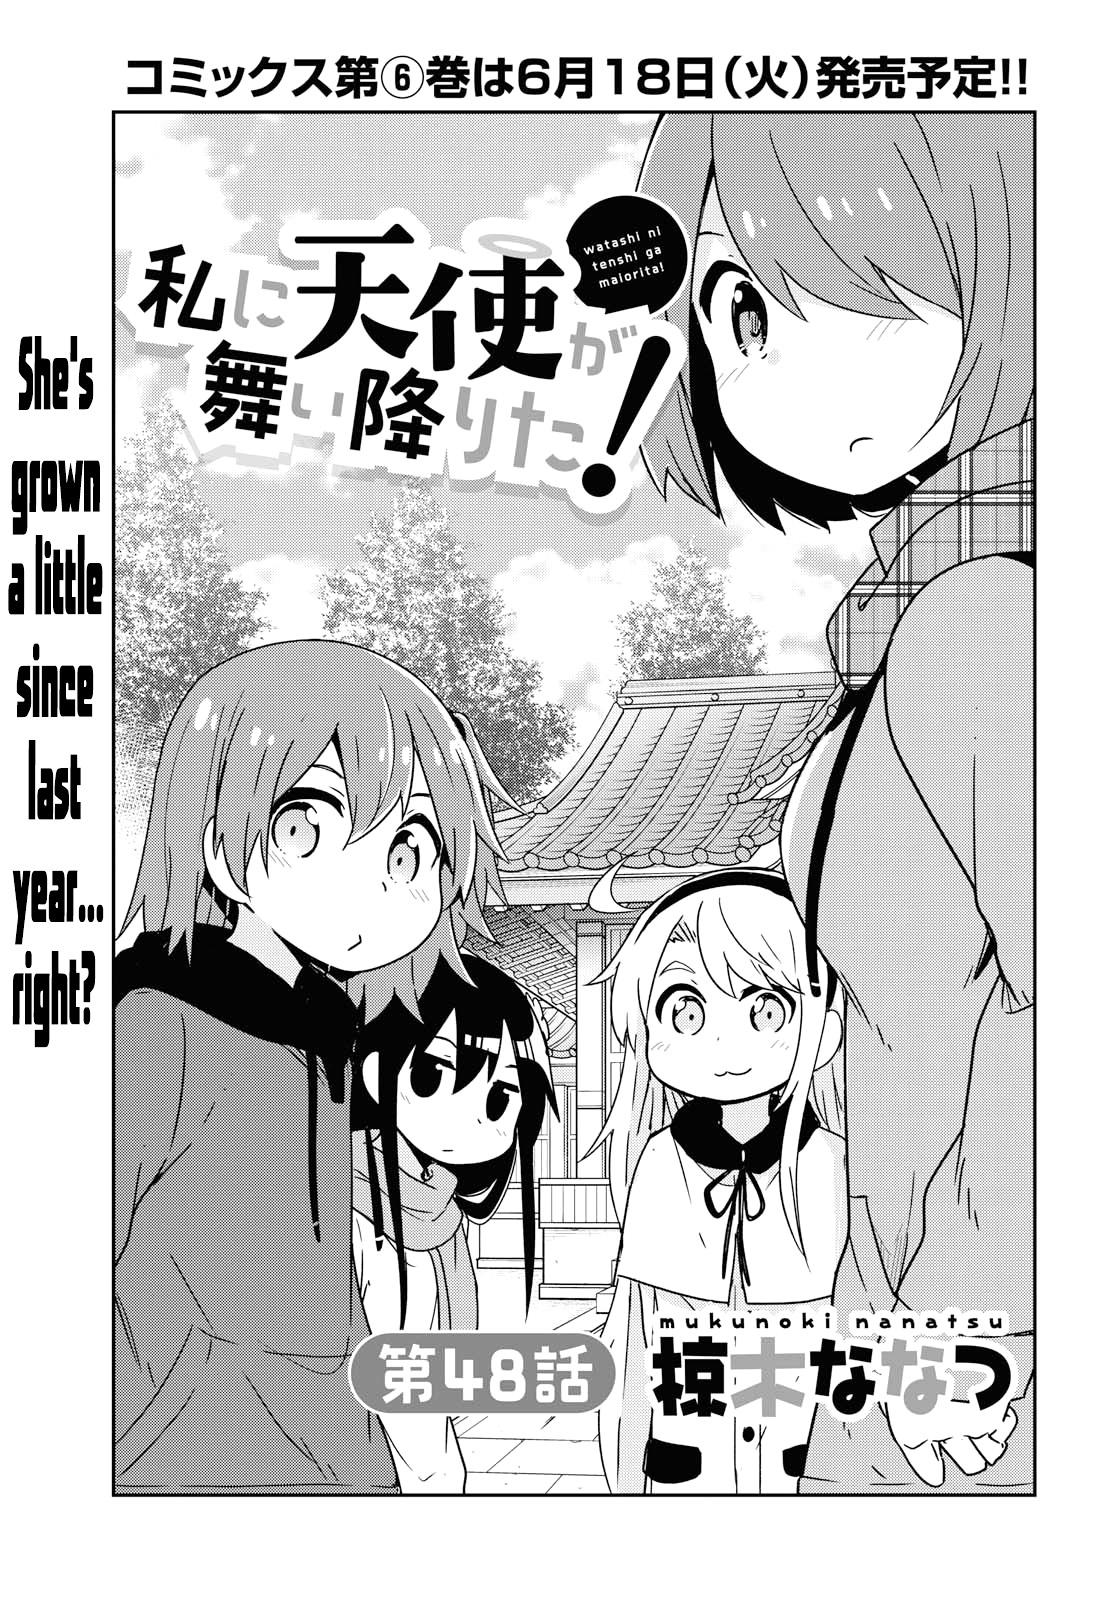 Read Watashi Ni Tenshi Ga Maiorita! Chapter 44 on Mangakakalot